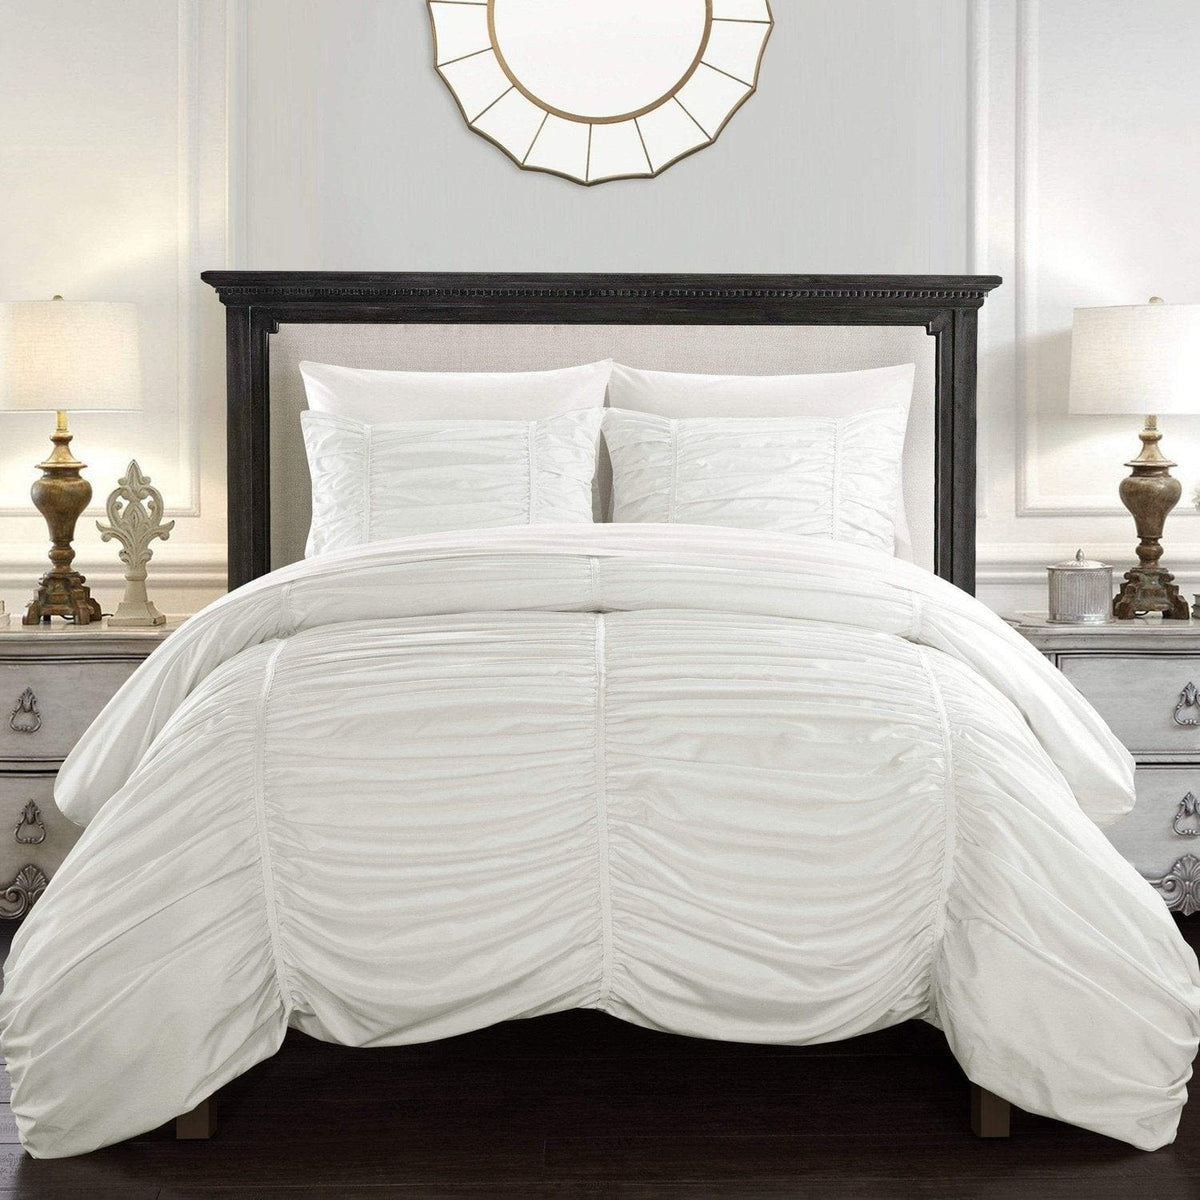 Chic Home Kaiah 7 Piece Striped Comforter Set White